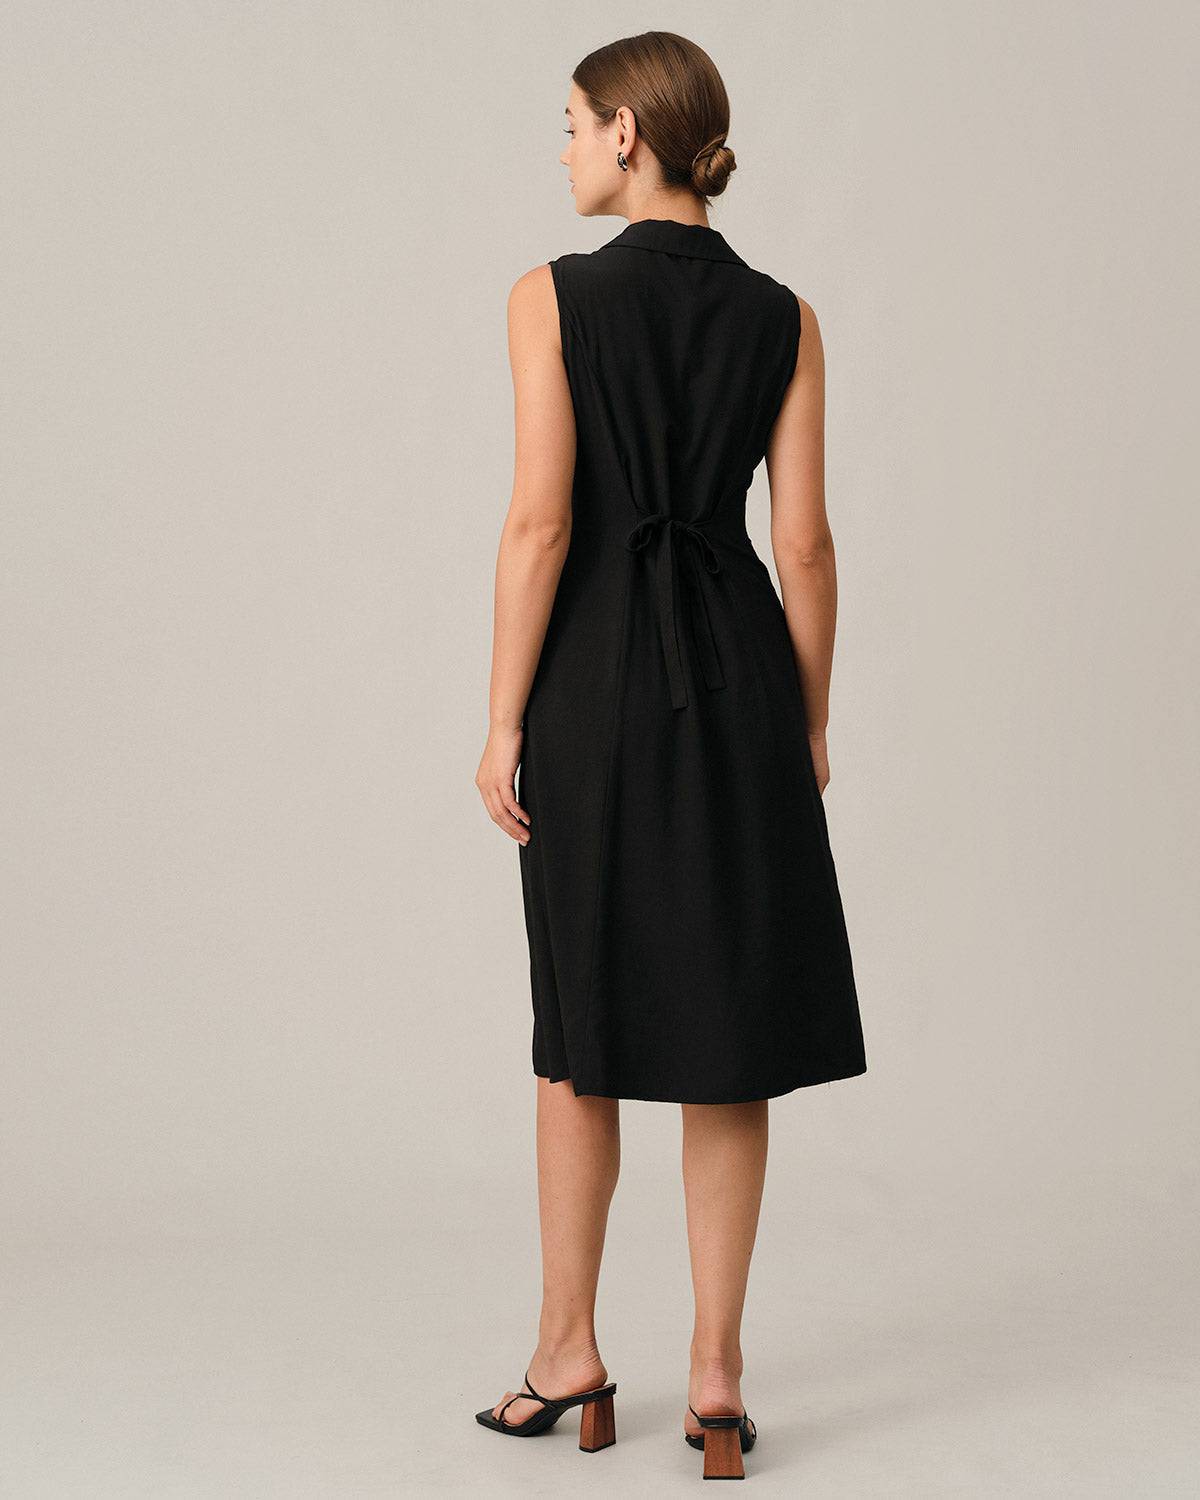 The Black Solid V Dress Neck - | - Dresses Black RIHOAS Sleeveless Black Tunic Midi Dress Midi V-Neck 